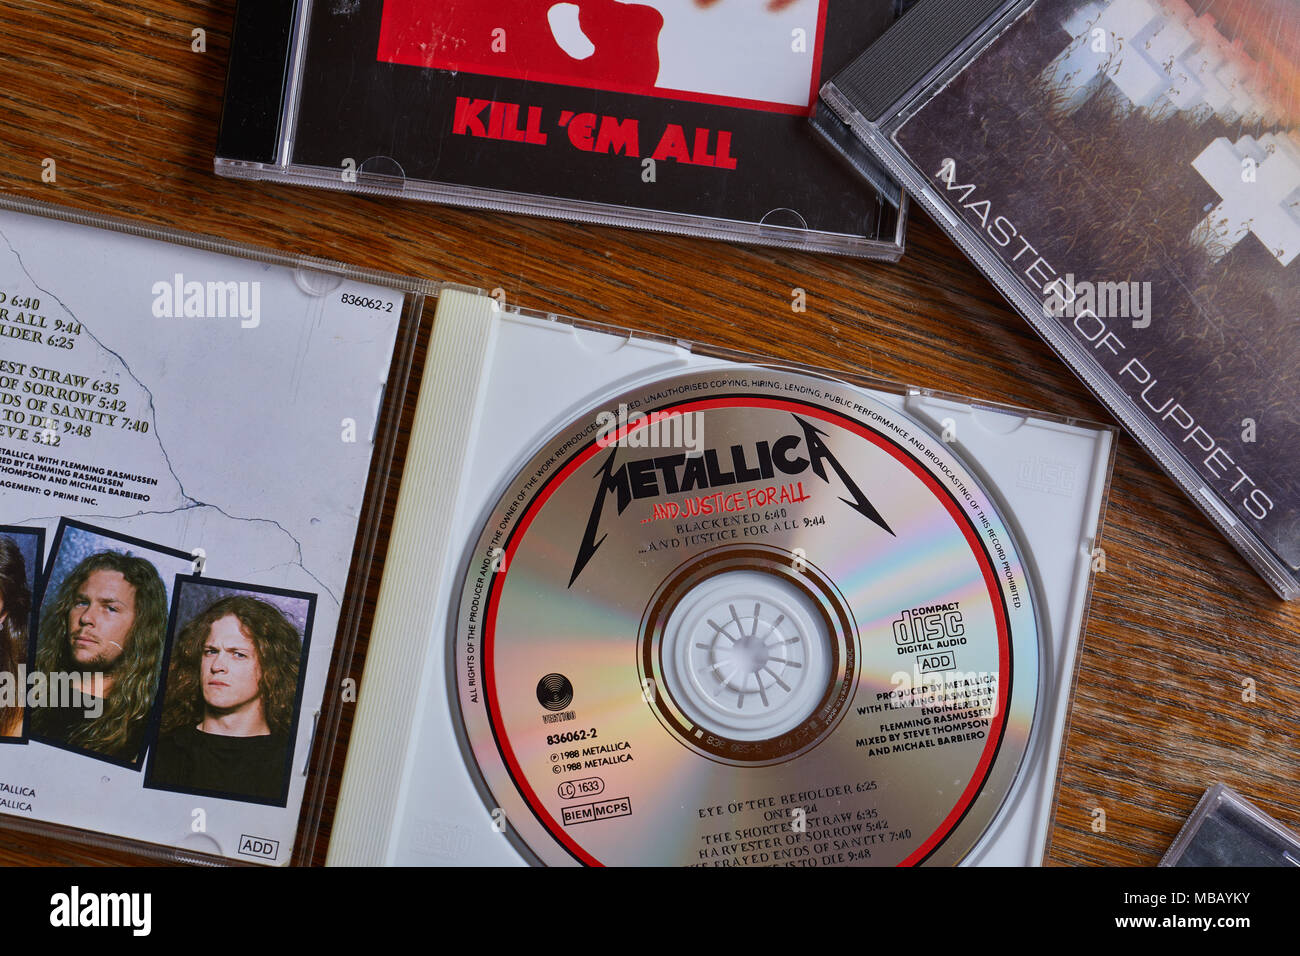 Master Of Puppets Metallica CD Photo Stock - Alamy